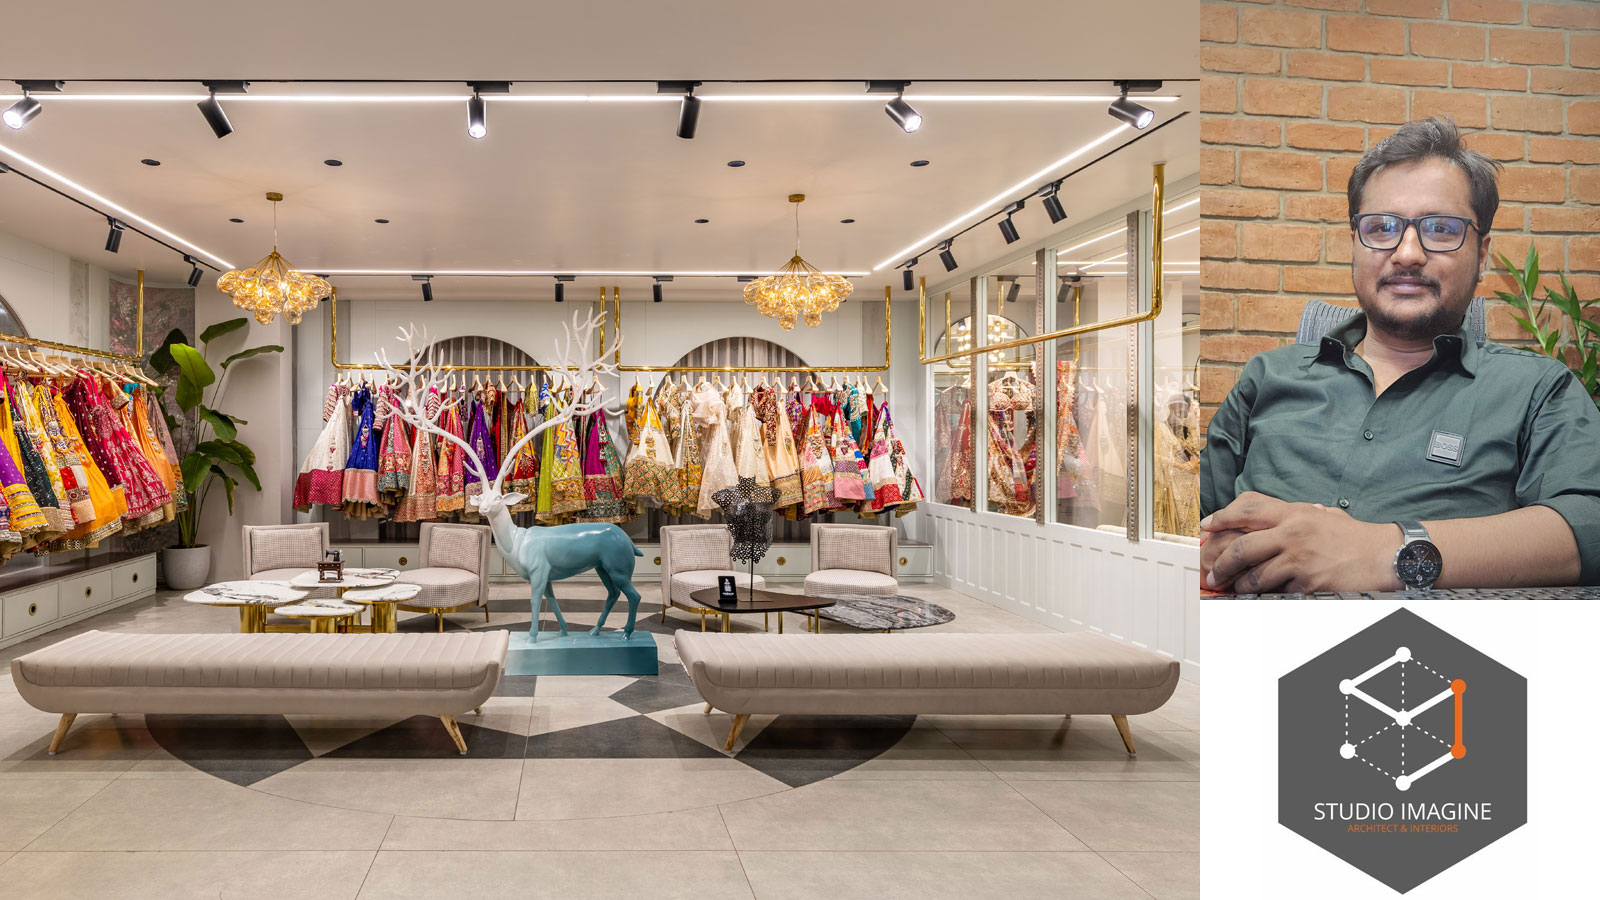 "frenzy couture and salon studio imagine indiaartndesign"